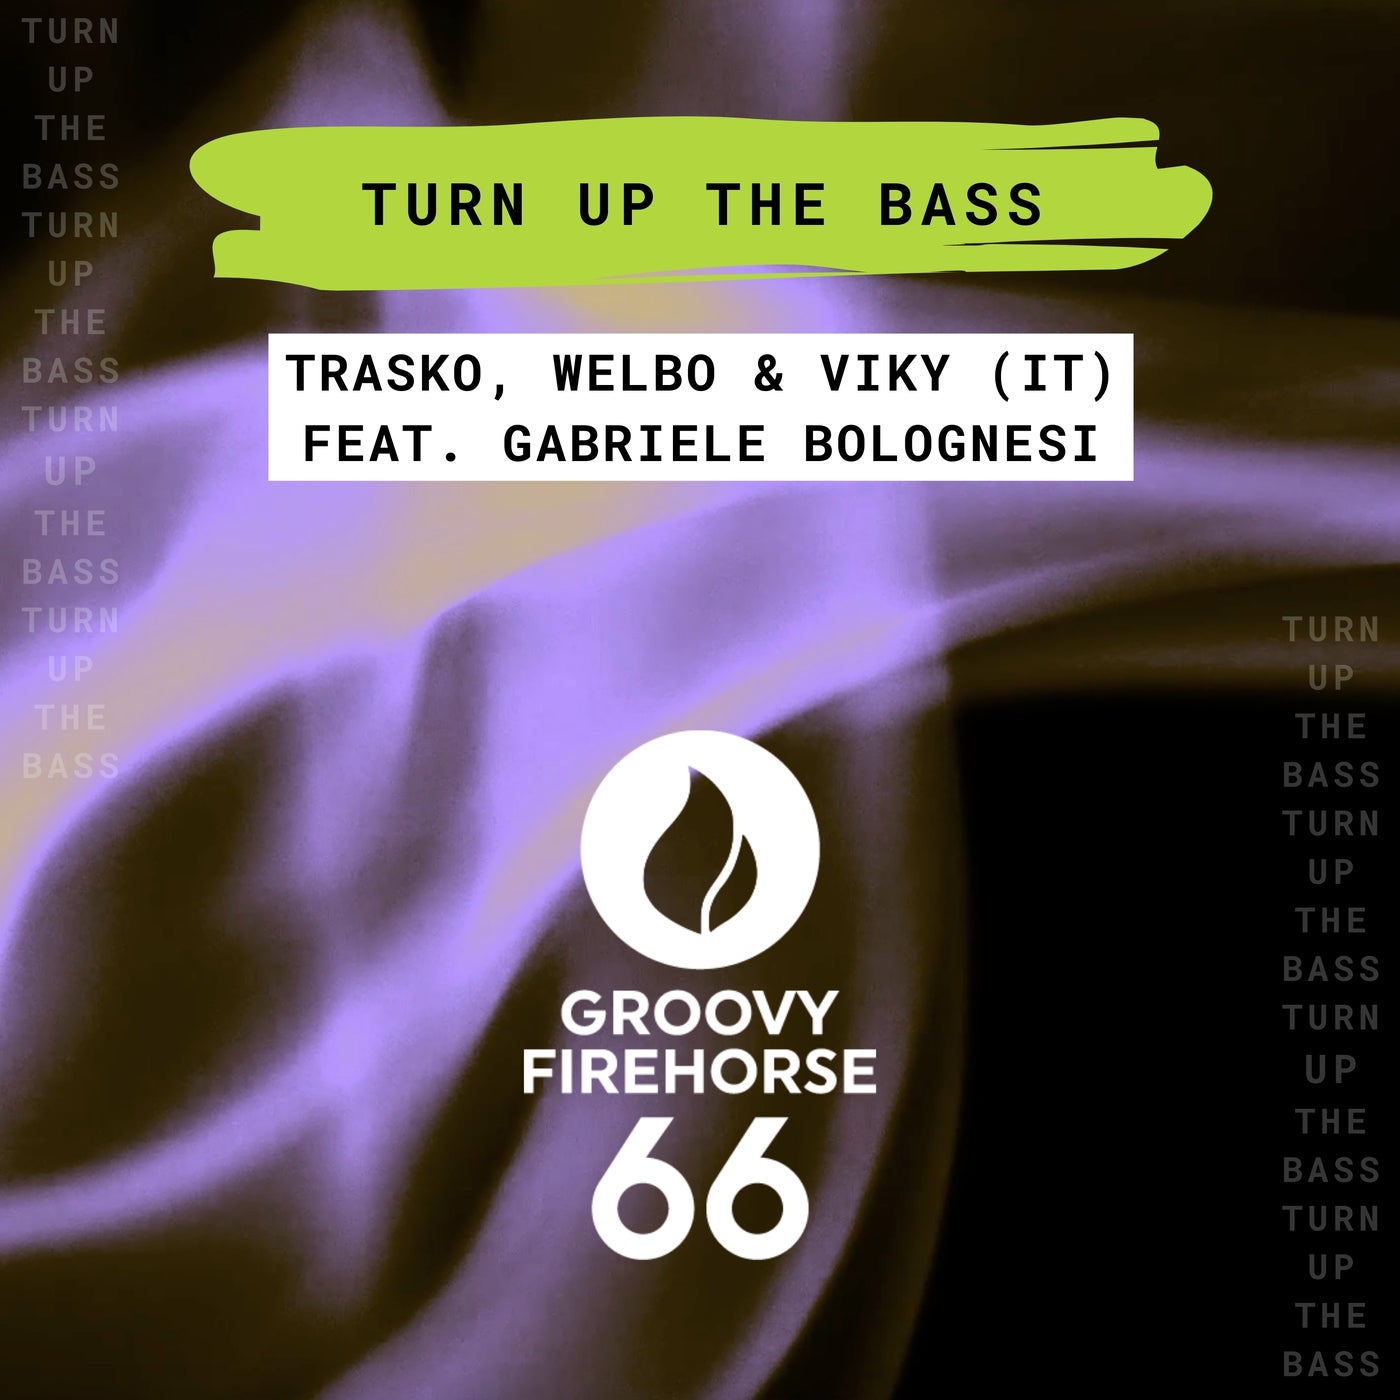 Trasko, Welbo, Viky (IT) Feat. Gabriele Bolognesi - Turn Up The Bass (Original Mix)